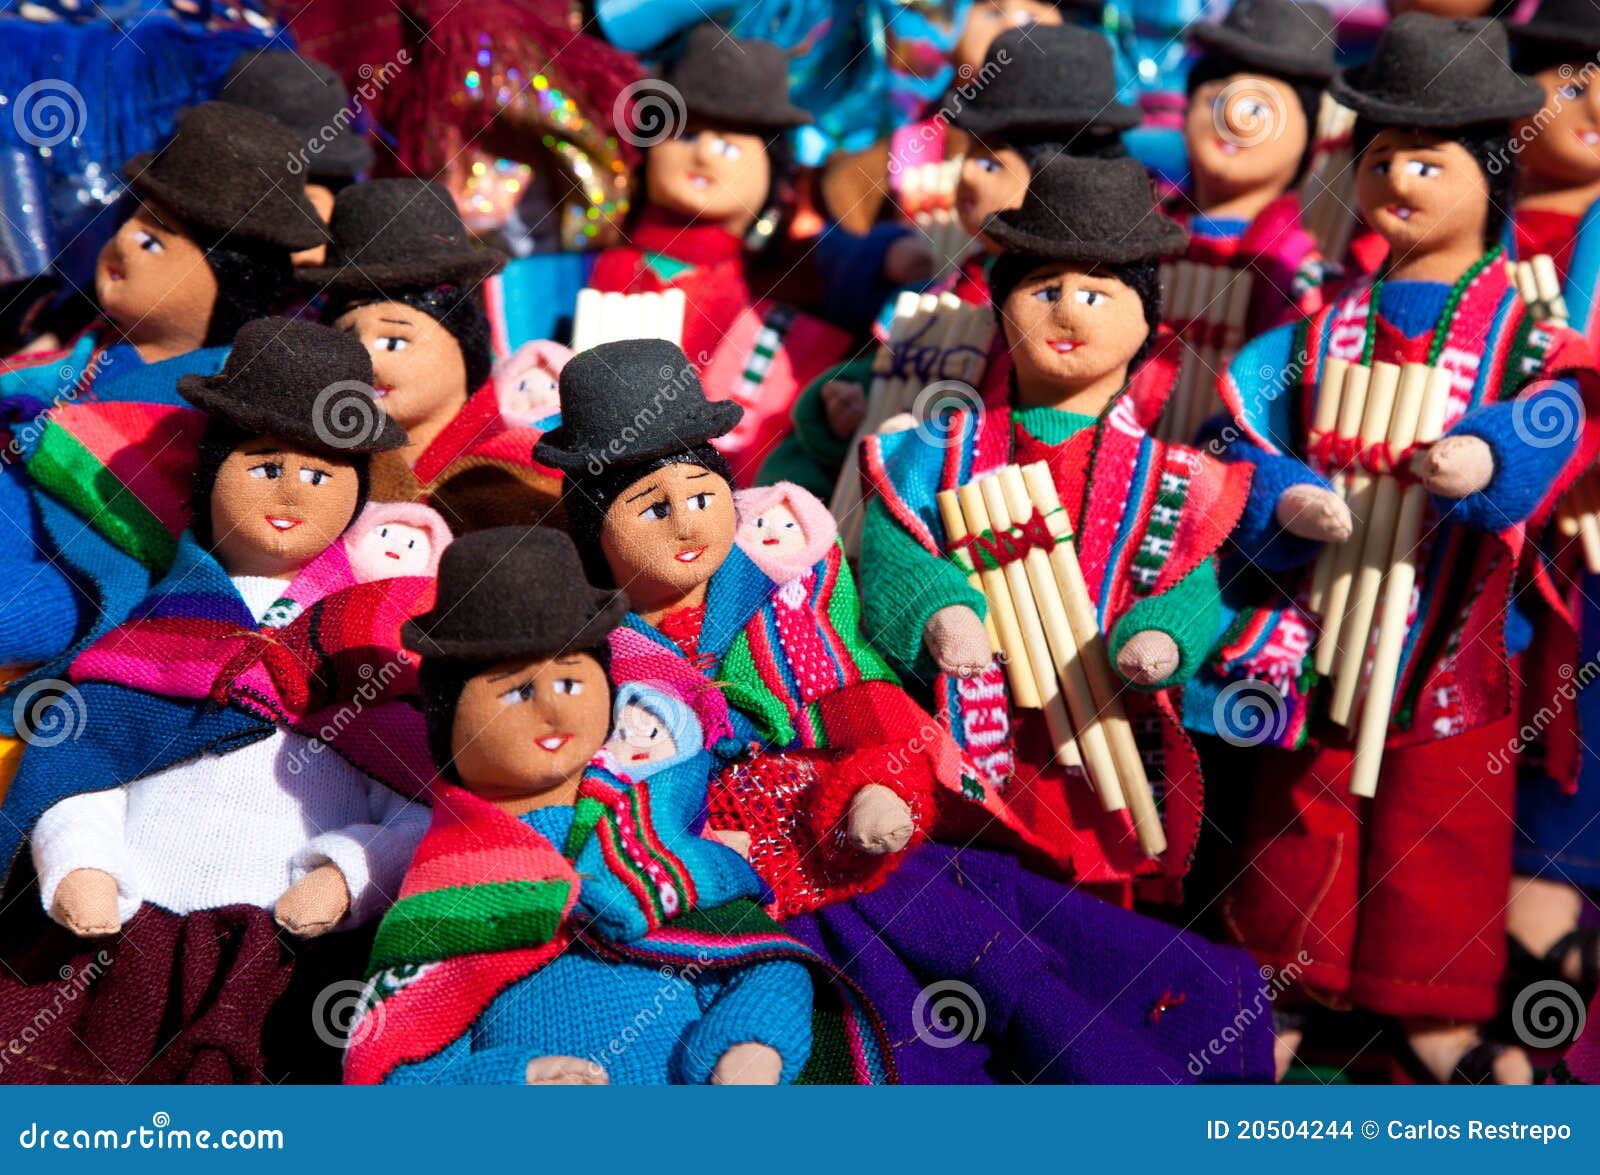 bolivian dolls